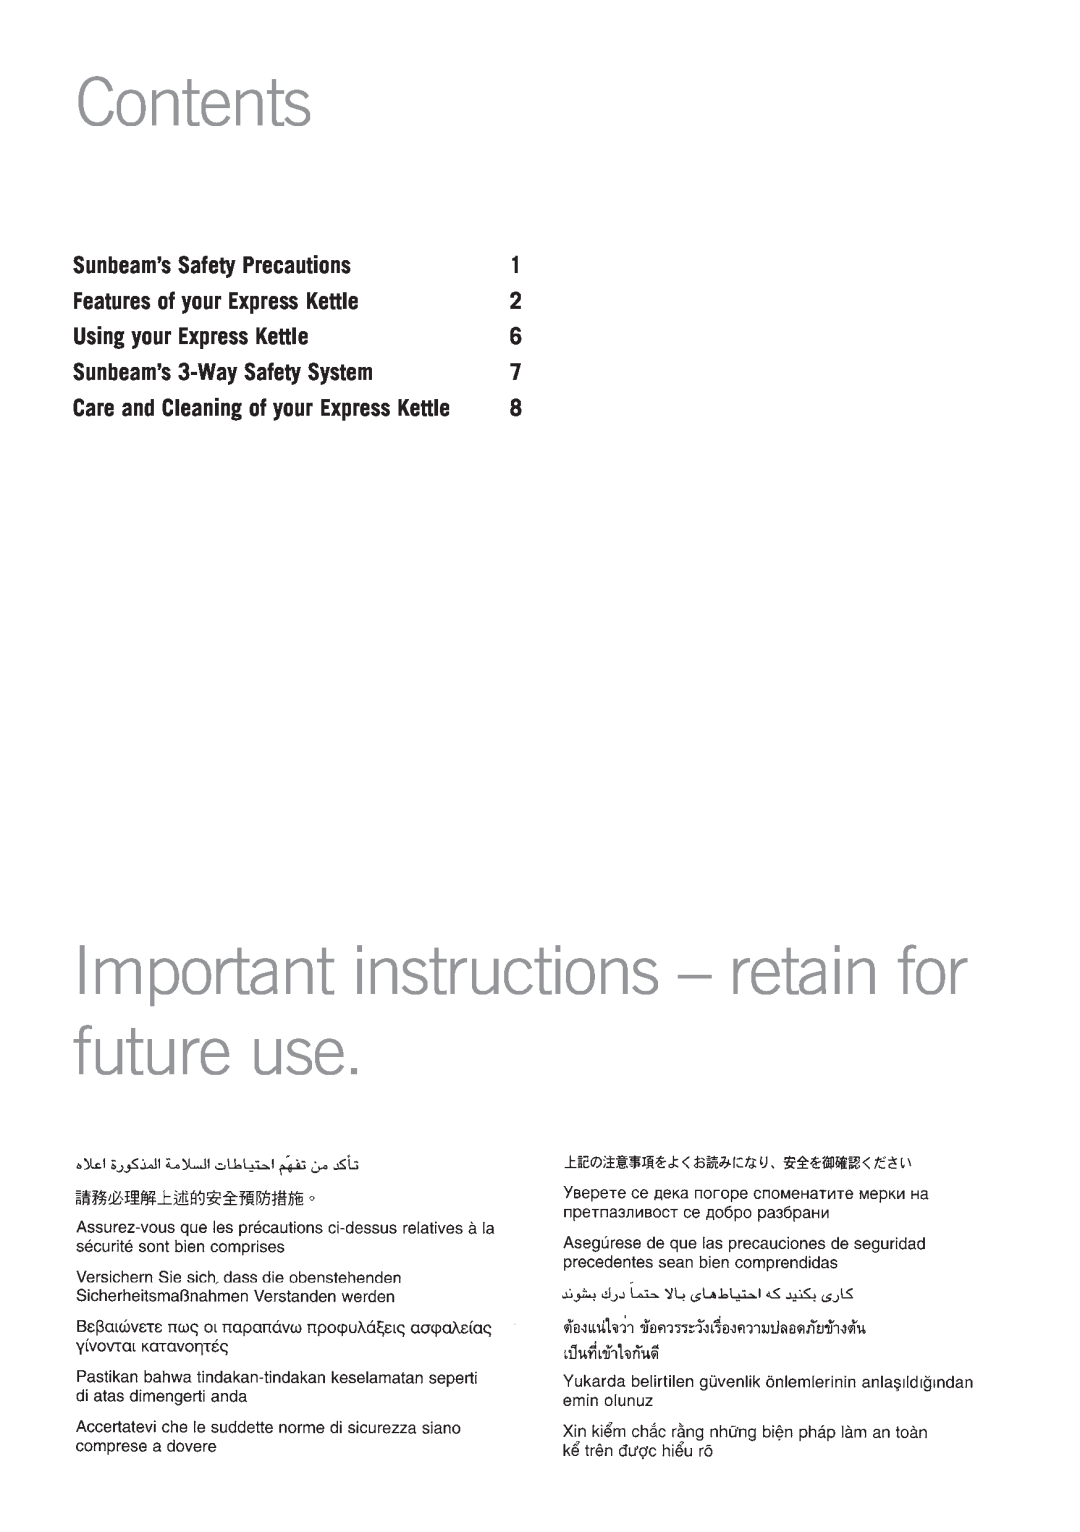 Sunbeam KE1600B, KE1400 manual Contents, Important instructions - retain for future use, Sunbeam’s Safety Precautions 